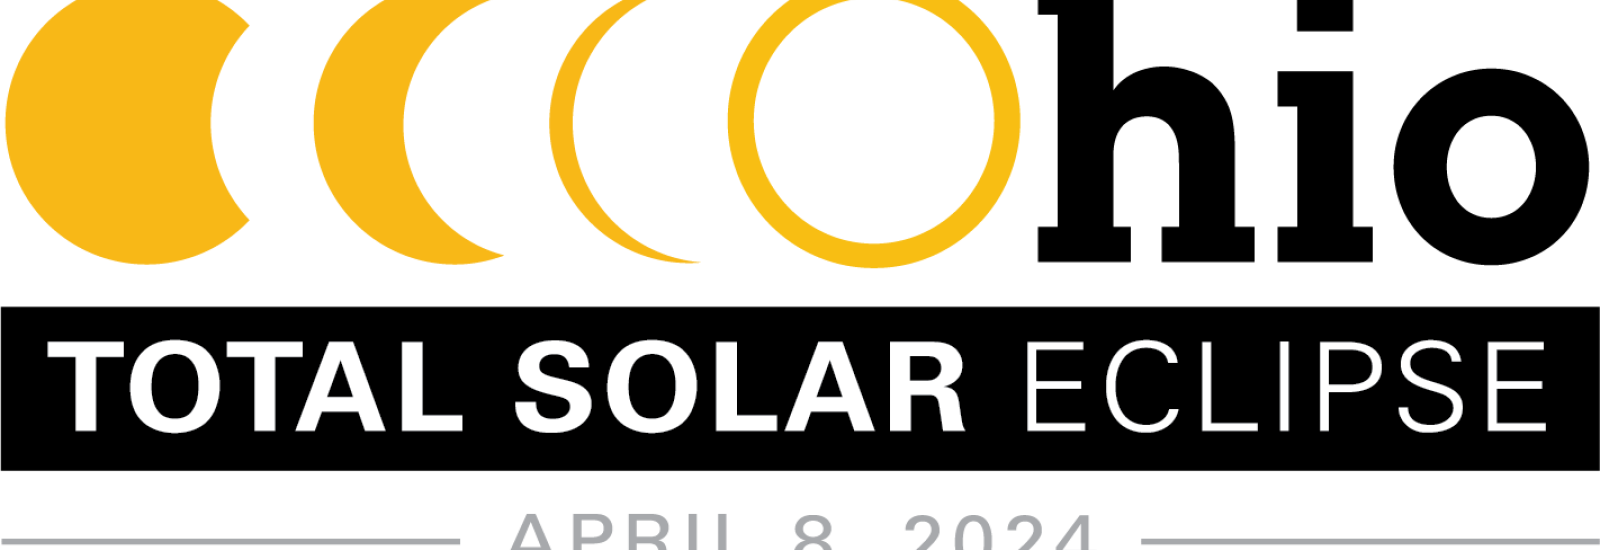 Ohio Solar Eclipse Logo